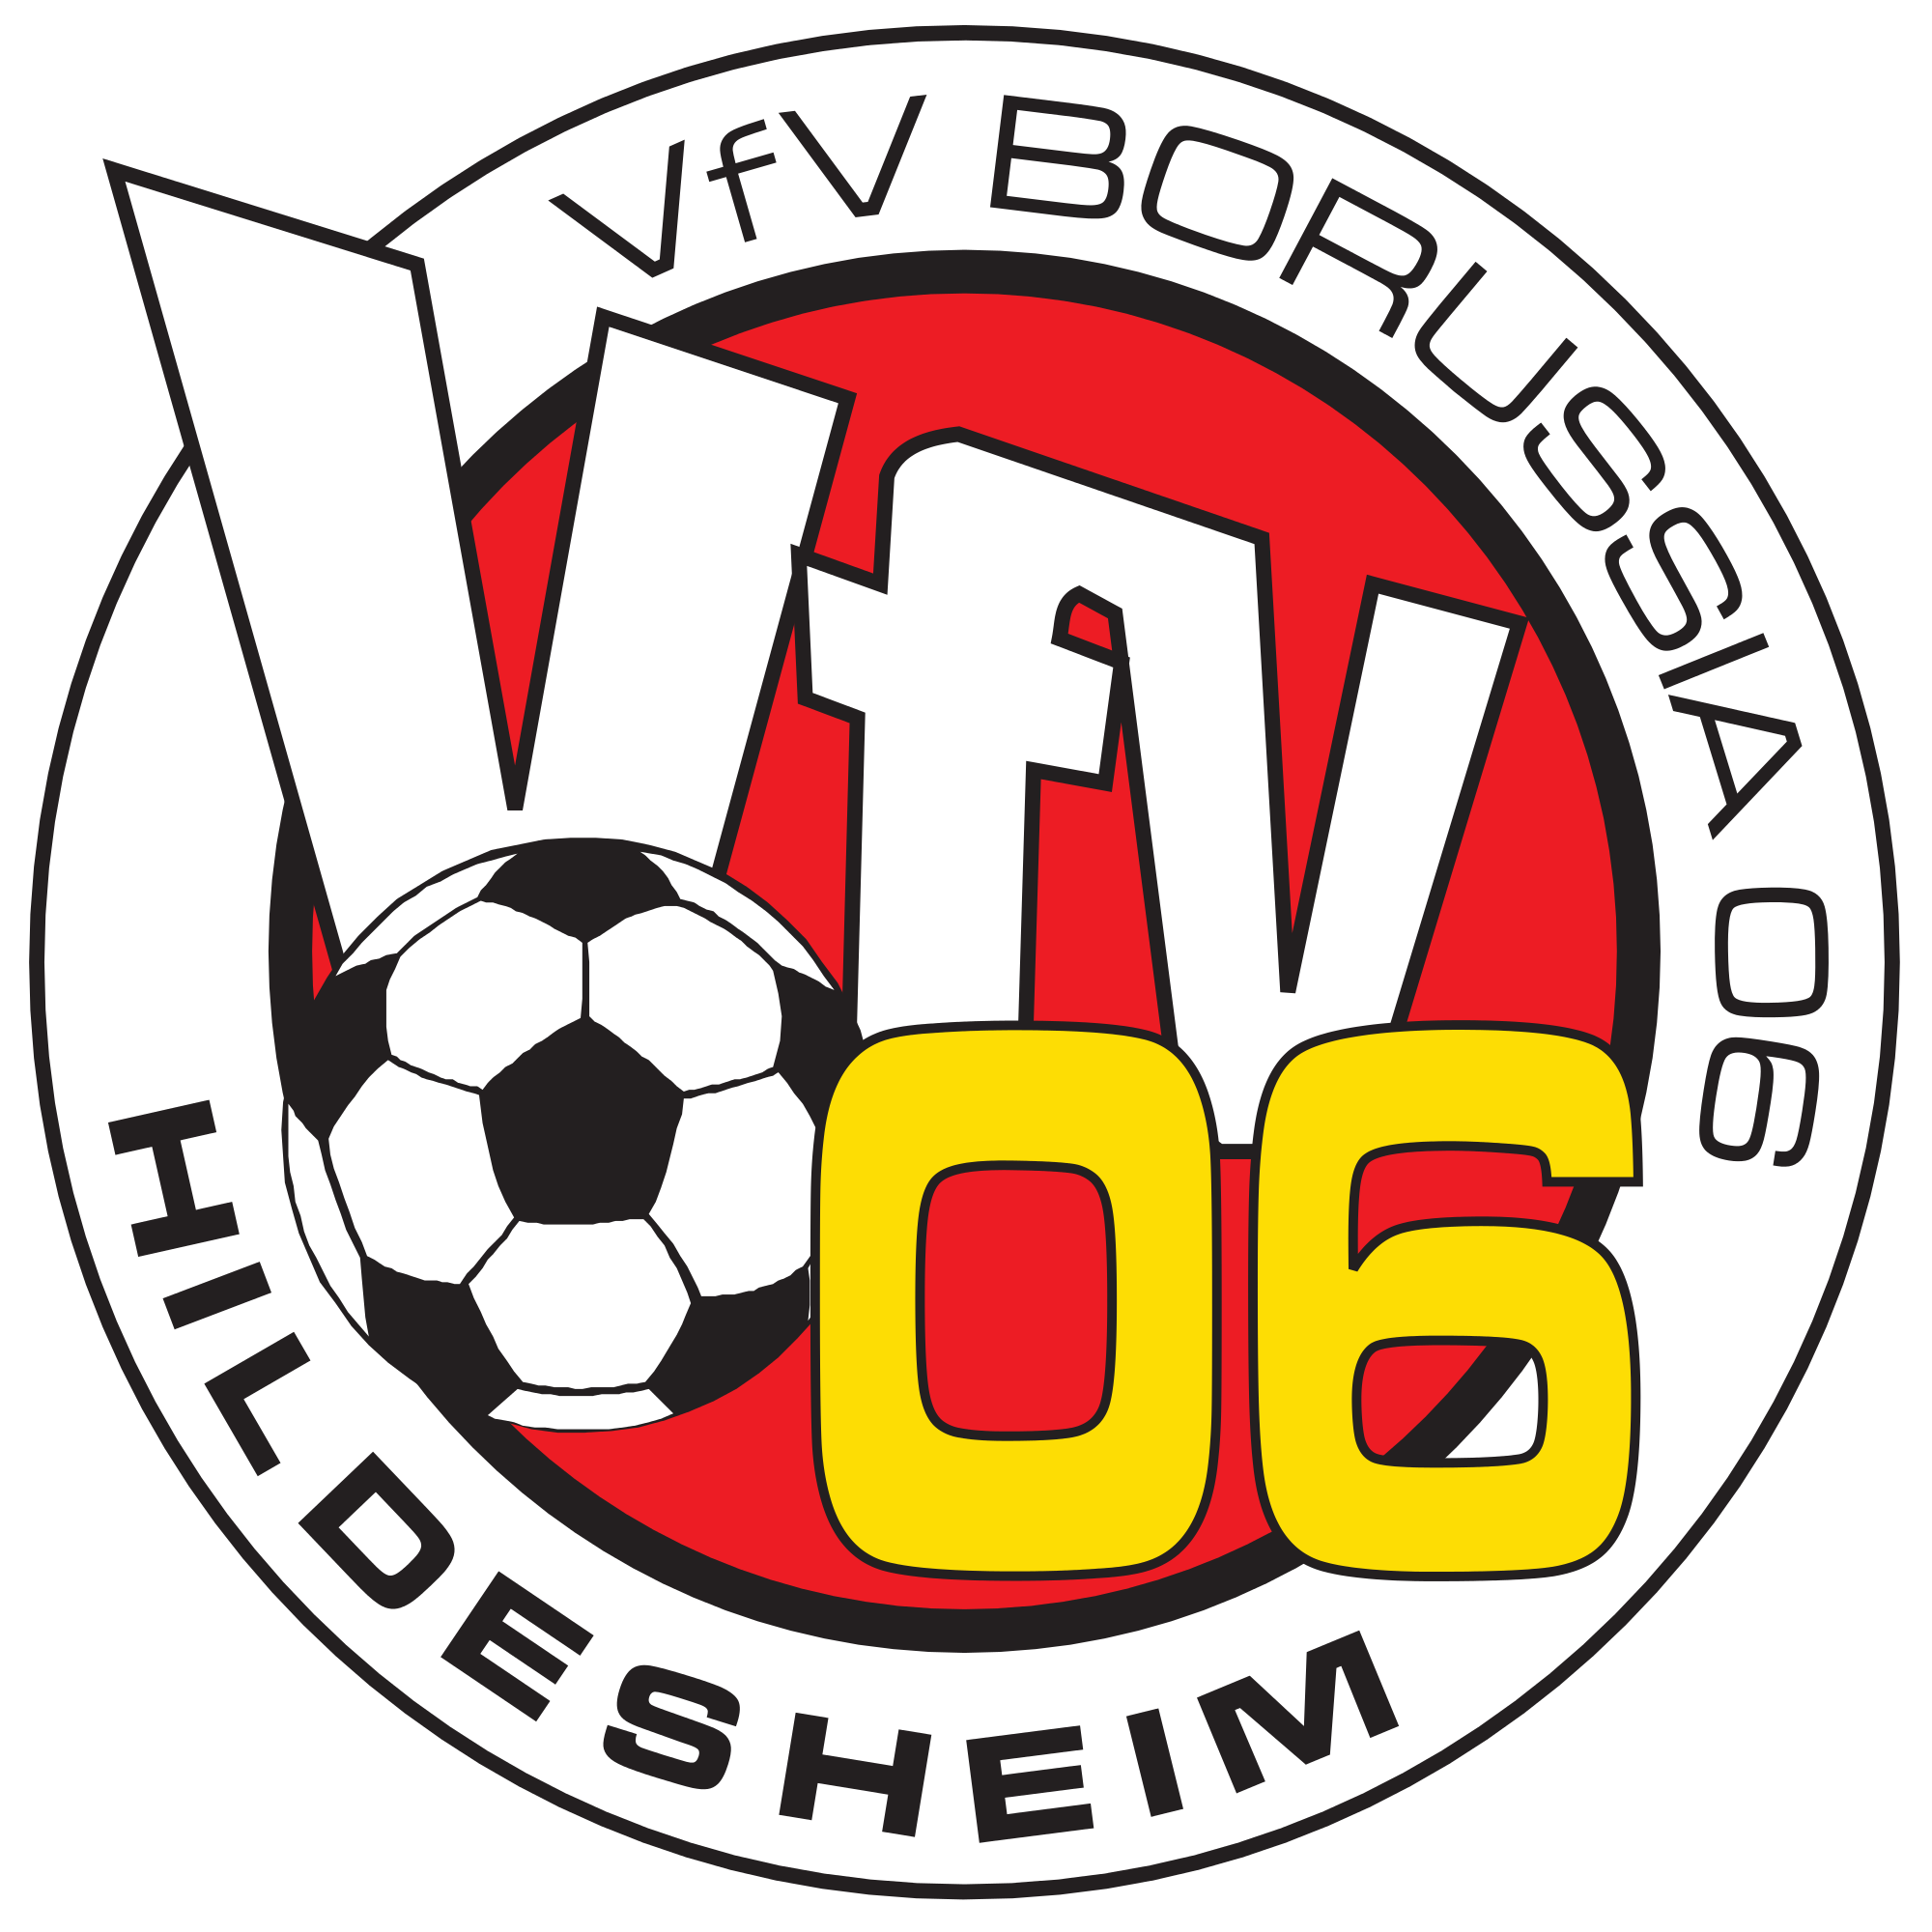 VfV 06 Hildesheim team logo